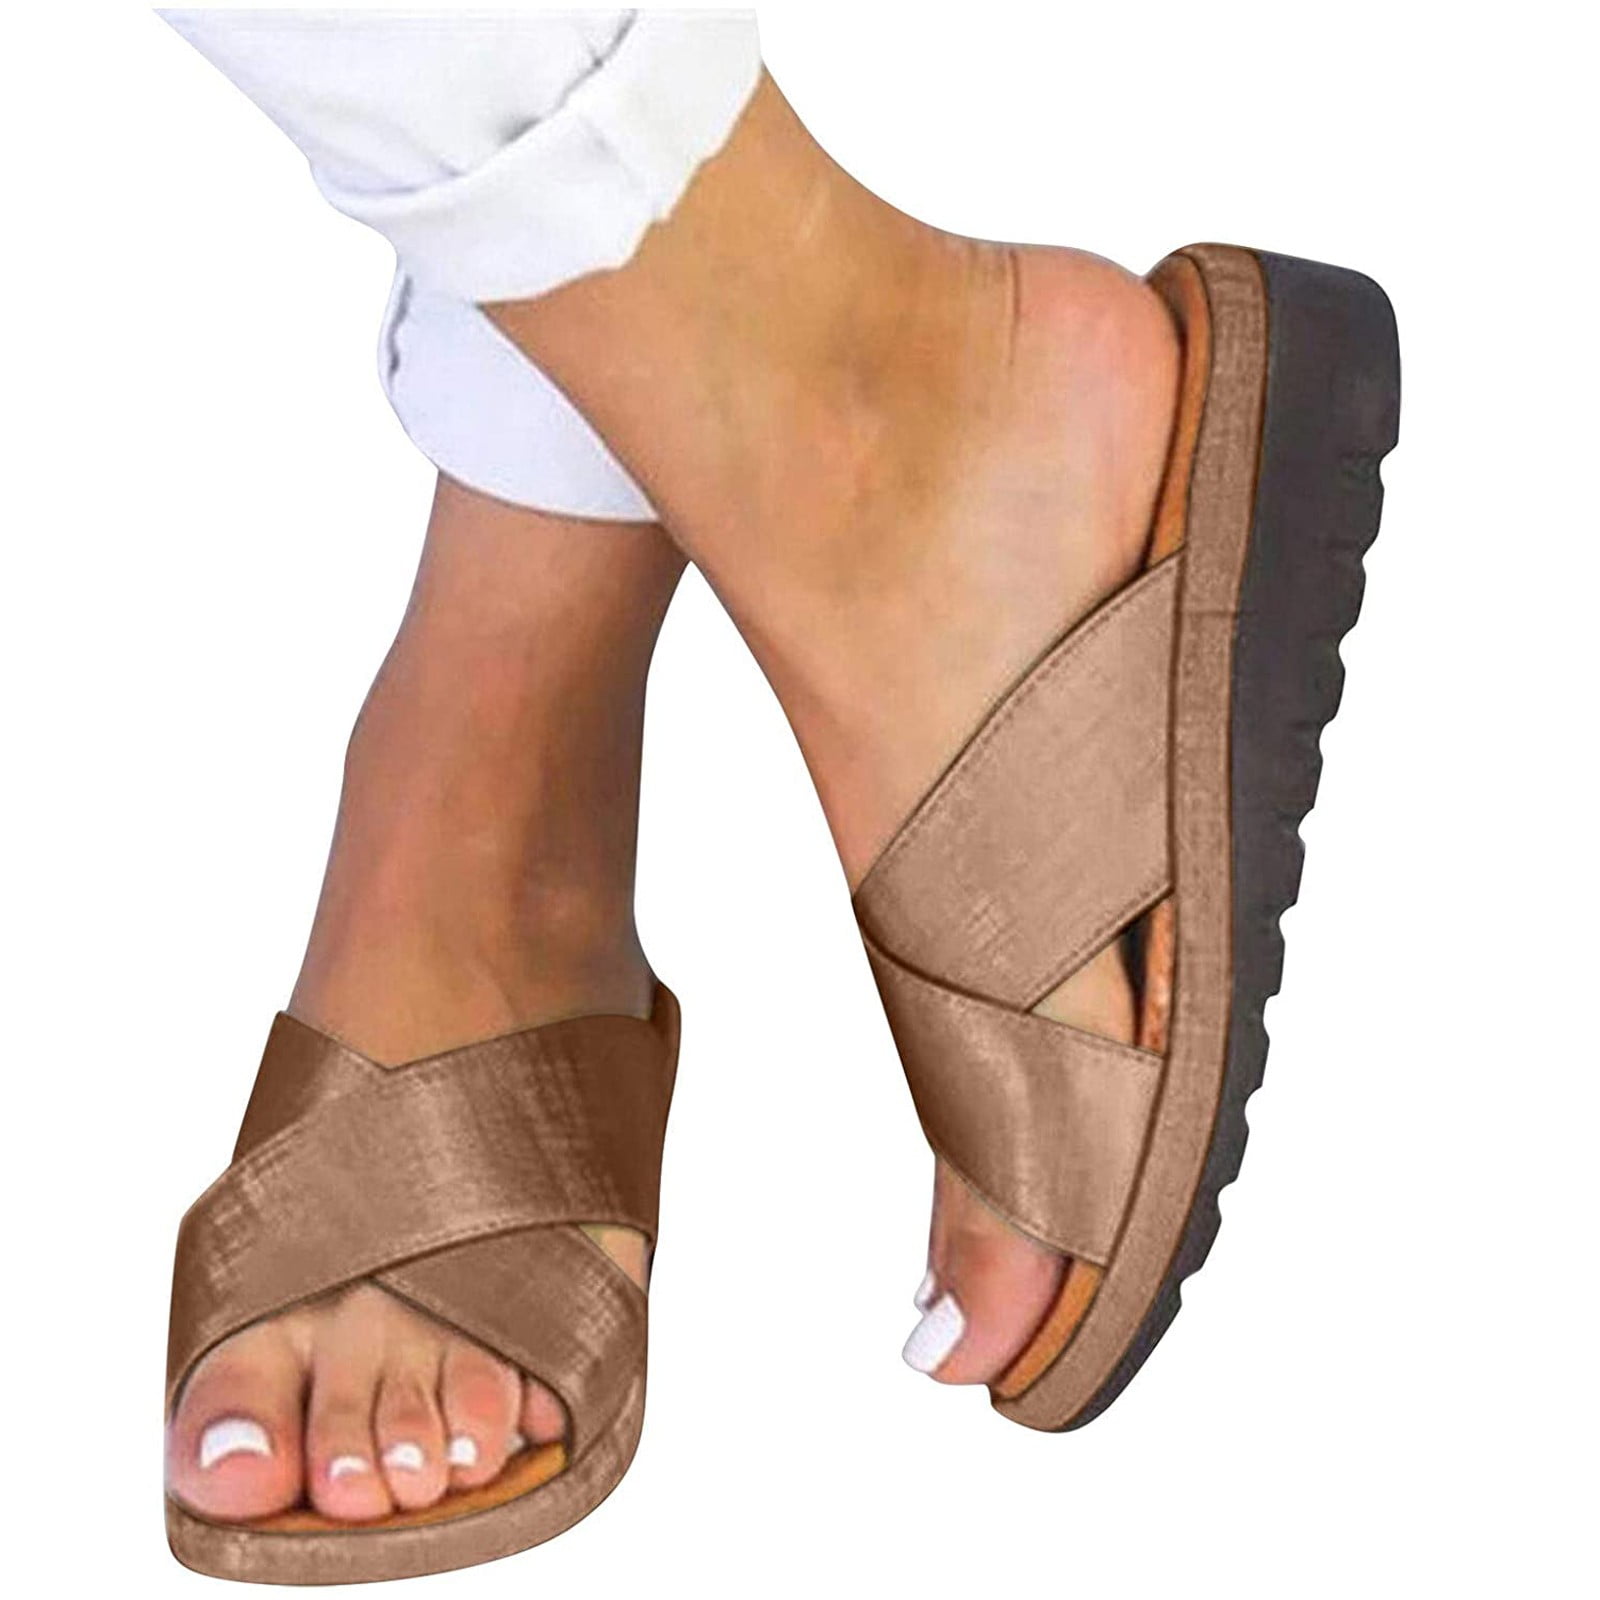 Sandals for Women Flat,Womens 2020 T-Strap Comfy Platform Sandal Shoes Summer Beach Travel Fashion Slipper Flip Flops